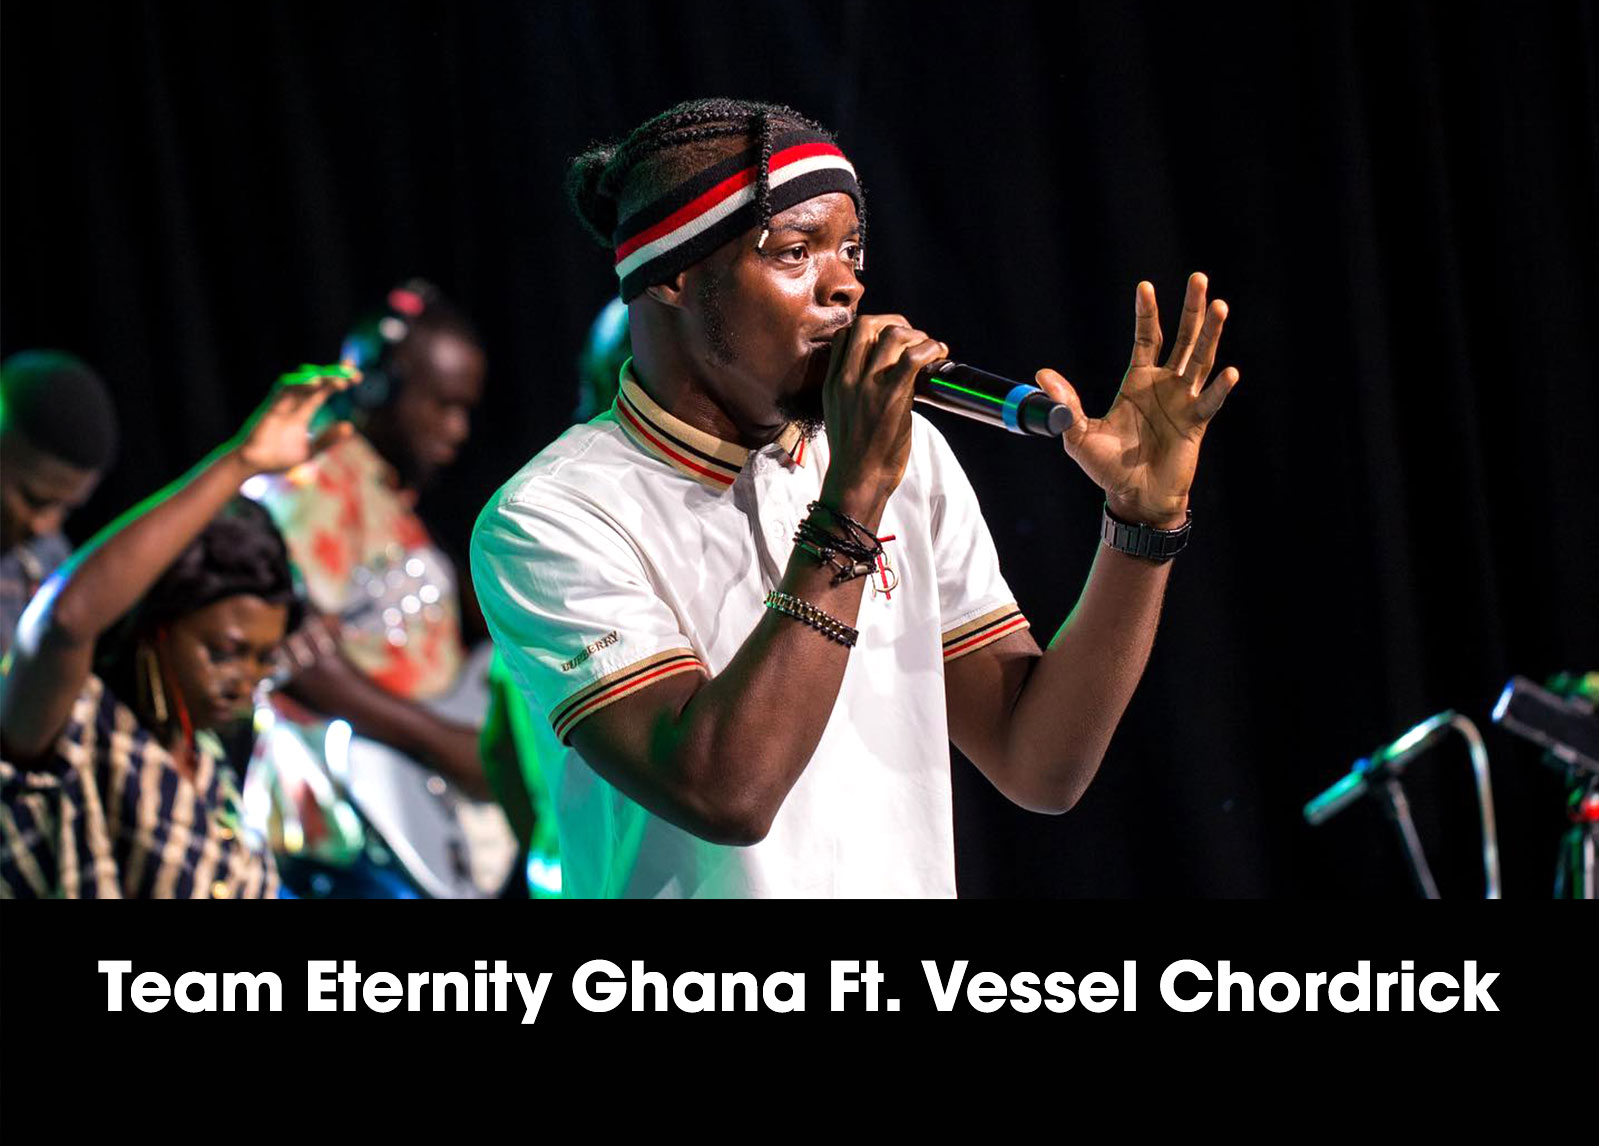 MUSIC VIDEO: Team Eternity Ghana- Prayer Answering God ft. Vessel Chordrick